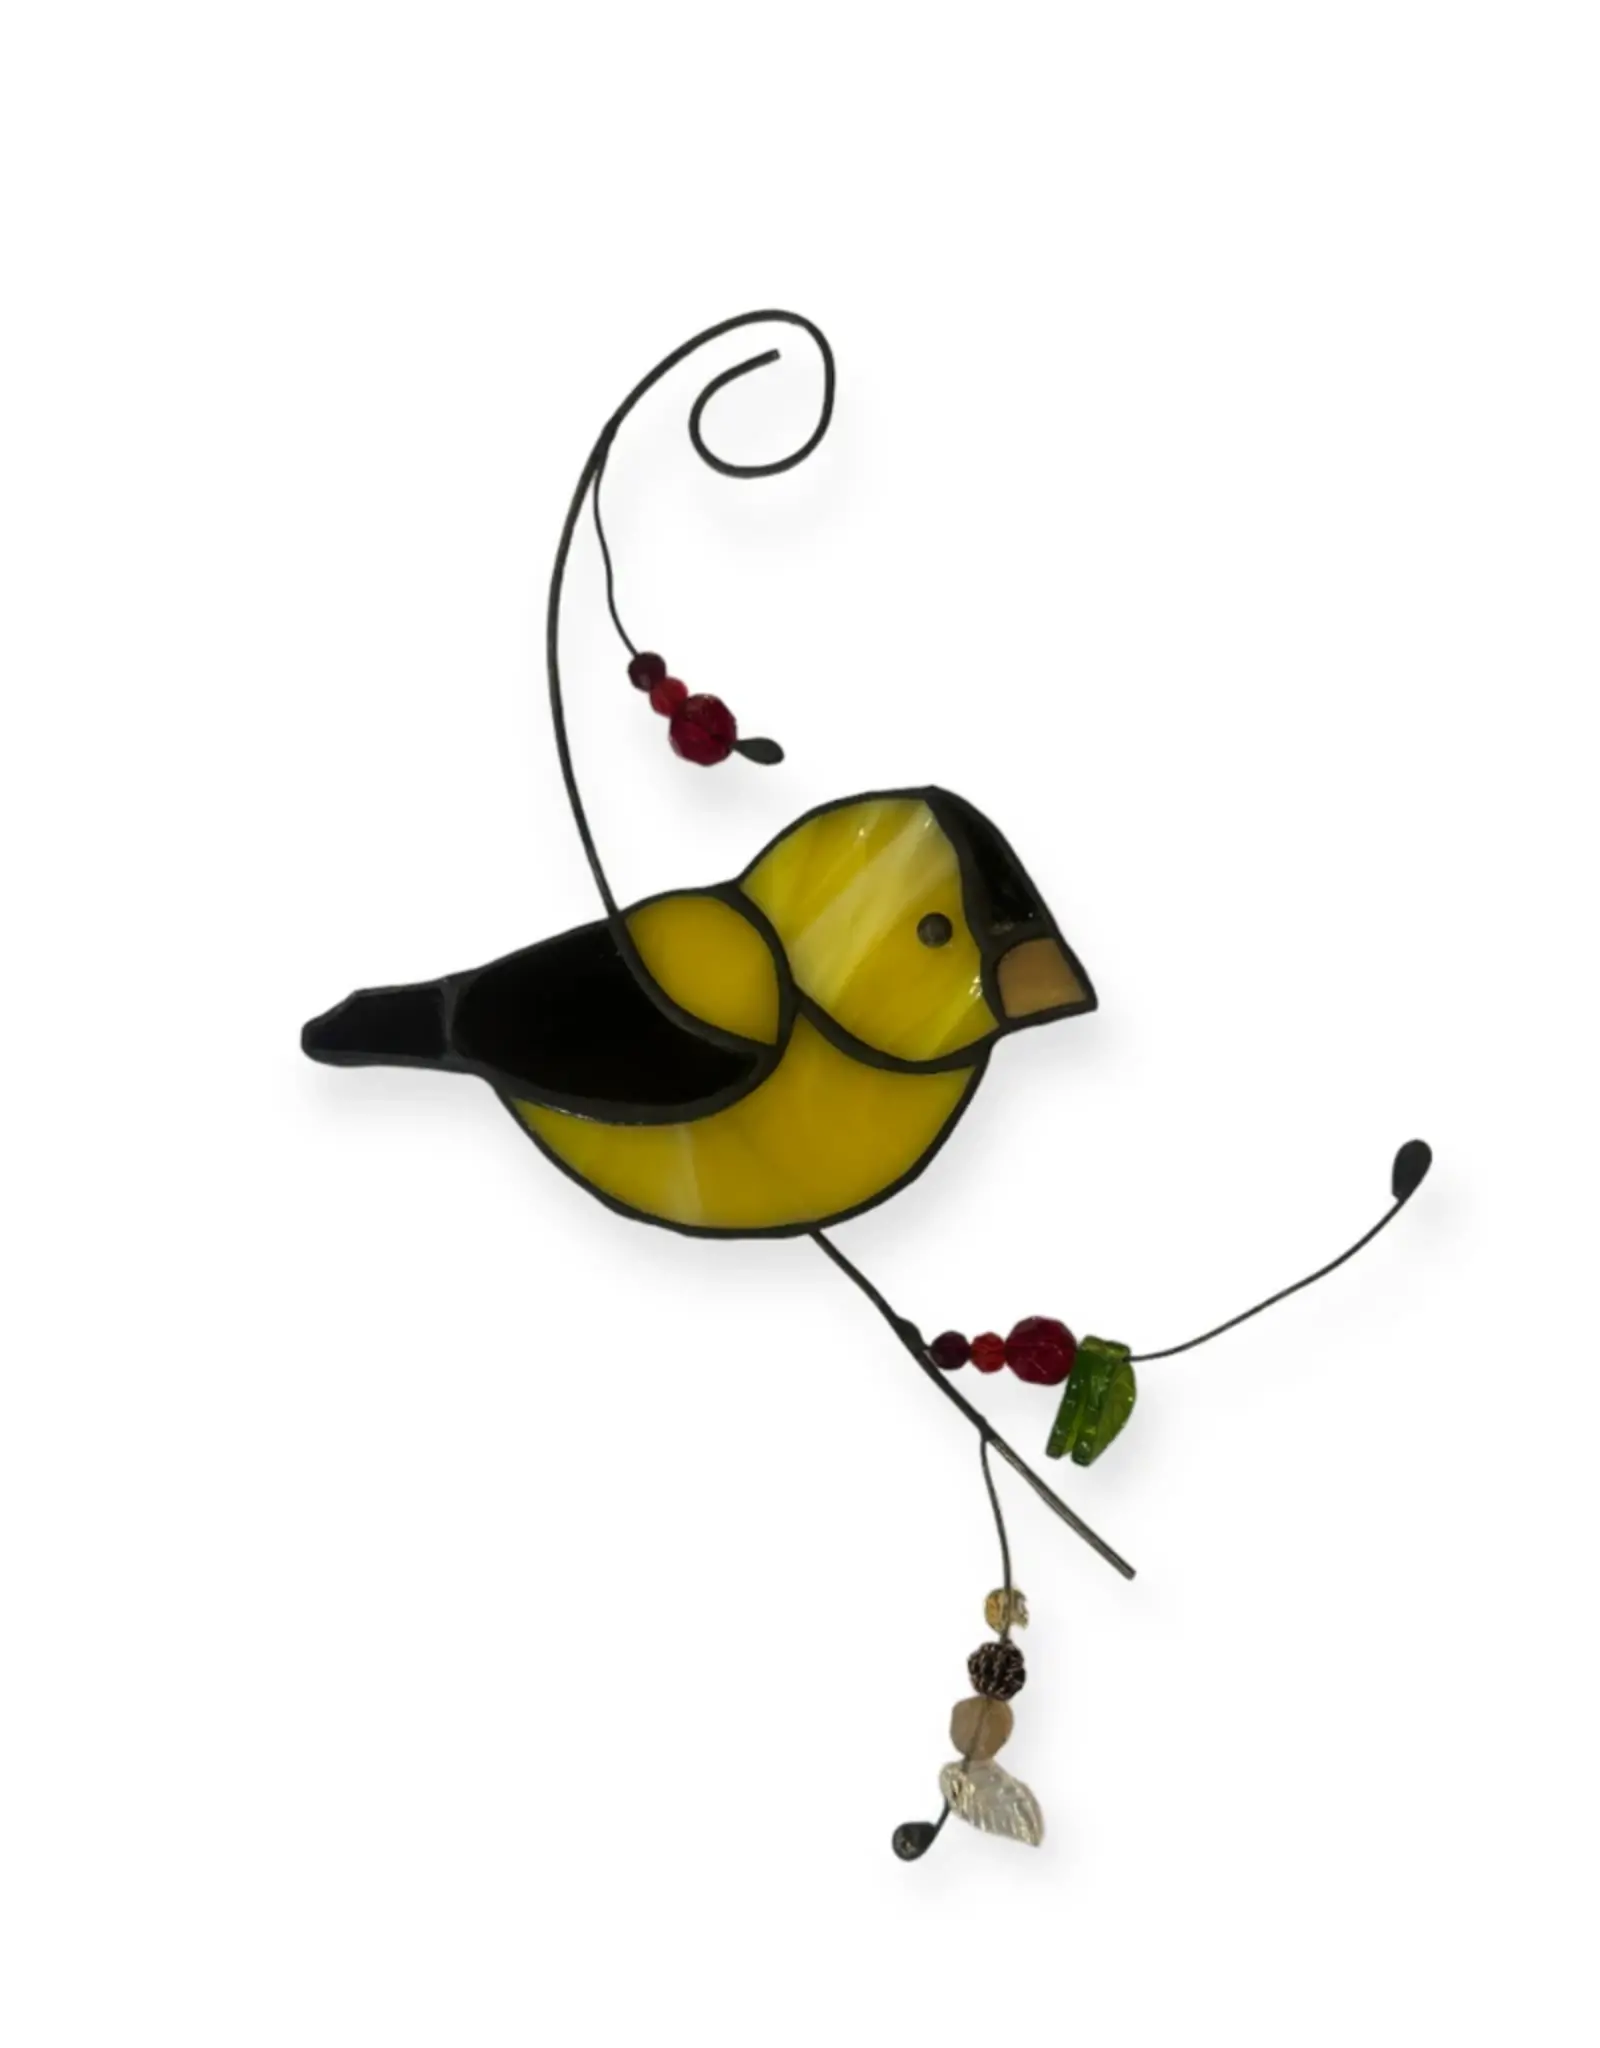 Artist- Andrew Reid Chubby Chicks - stained glass birds by Andrew Reid